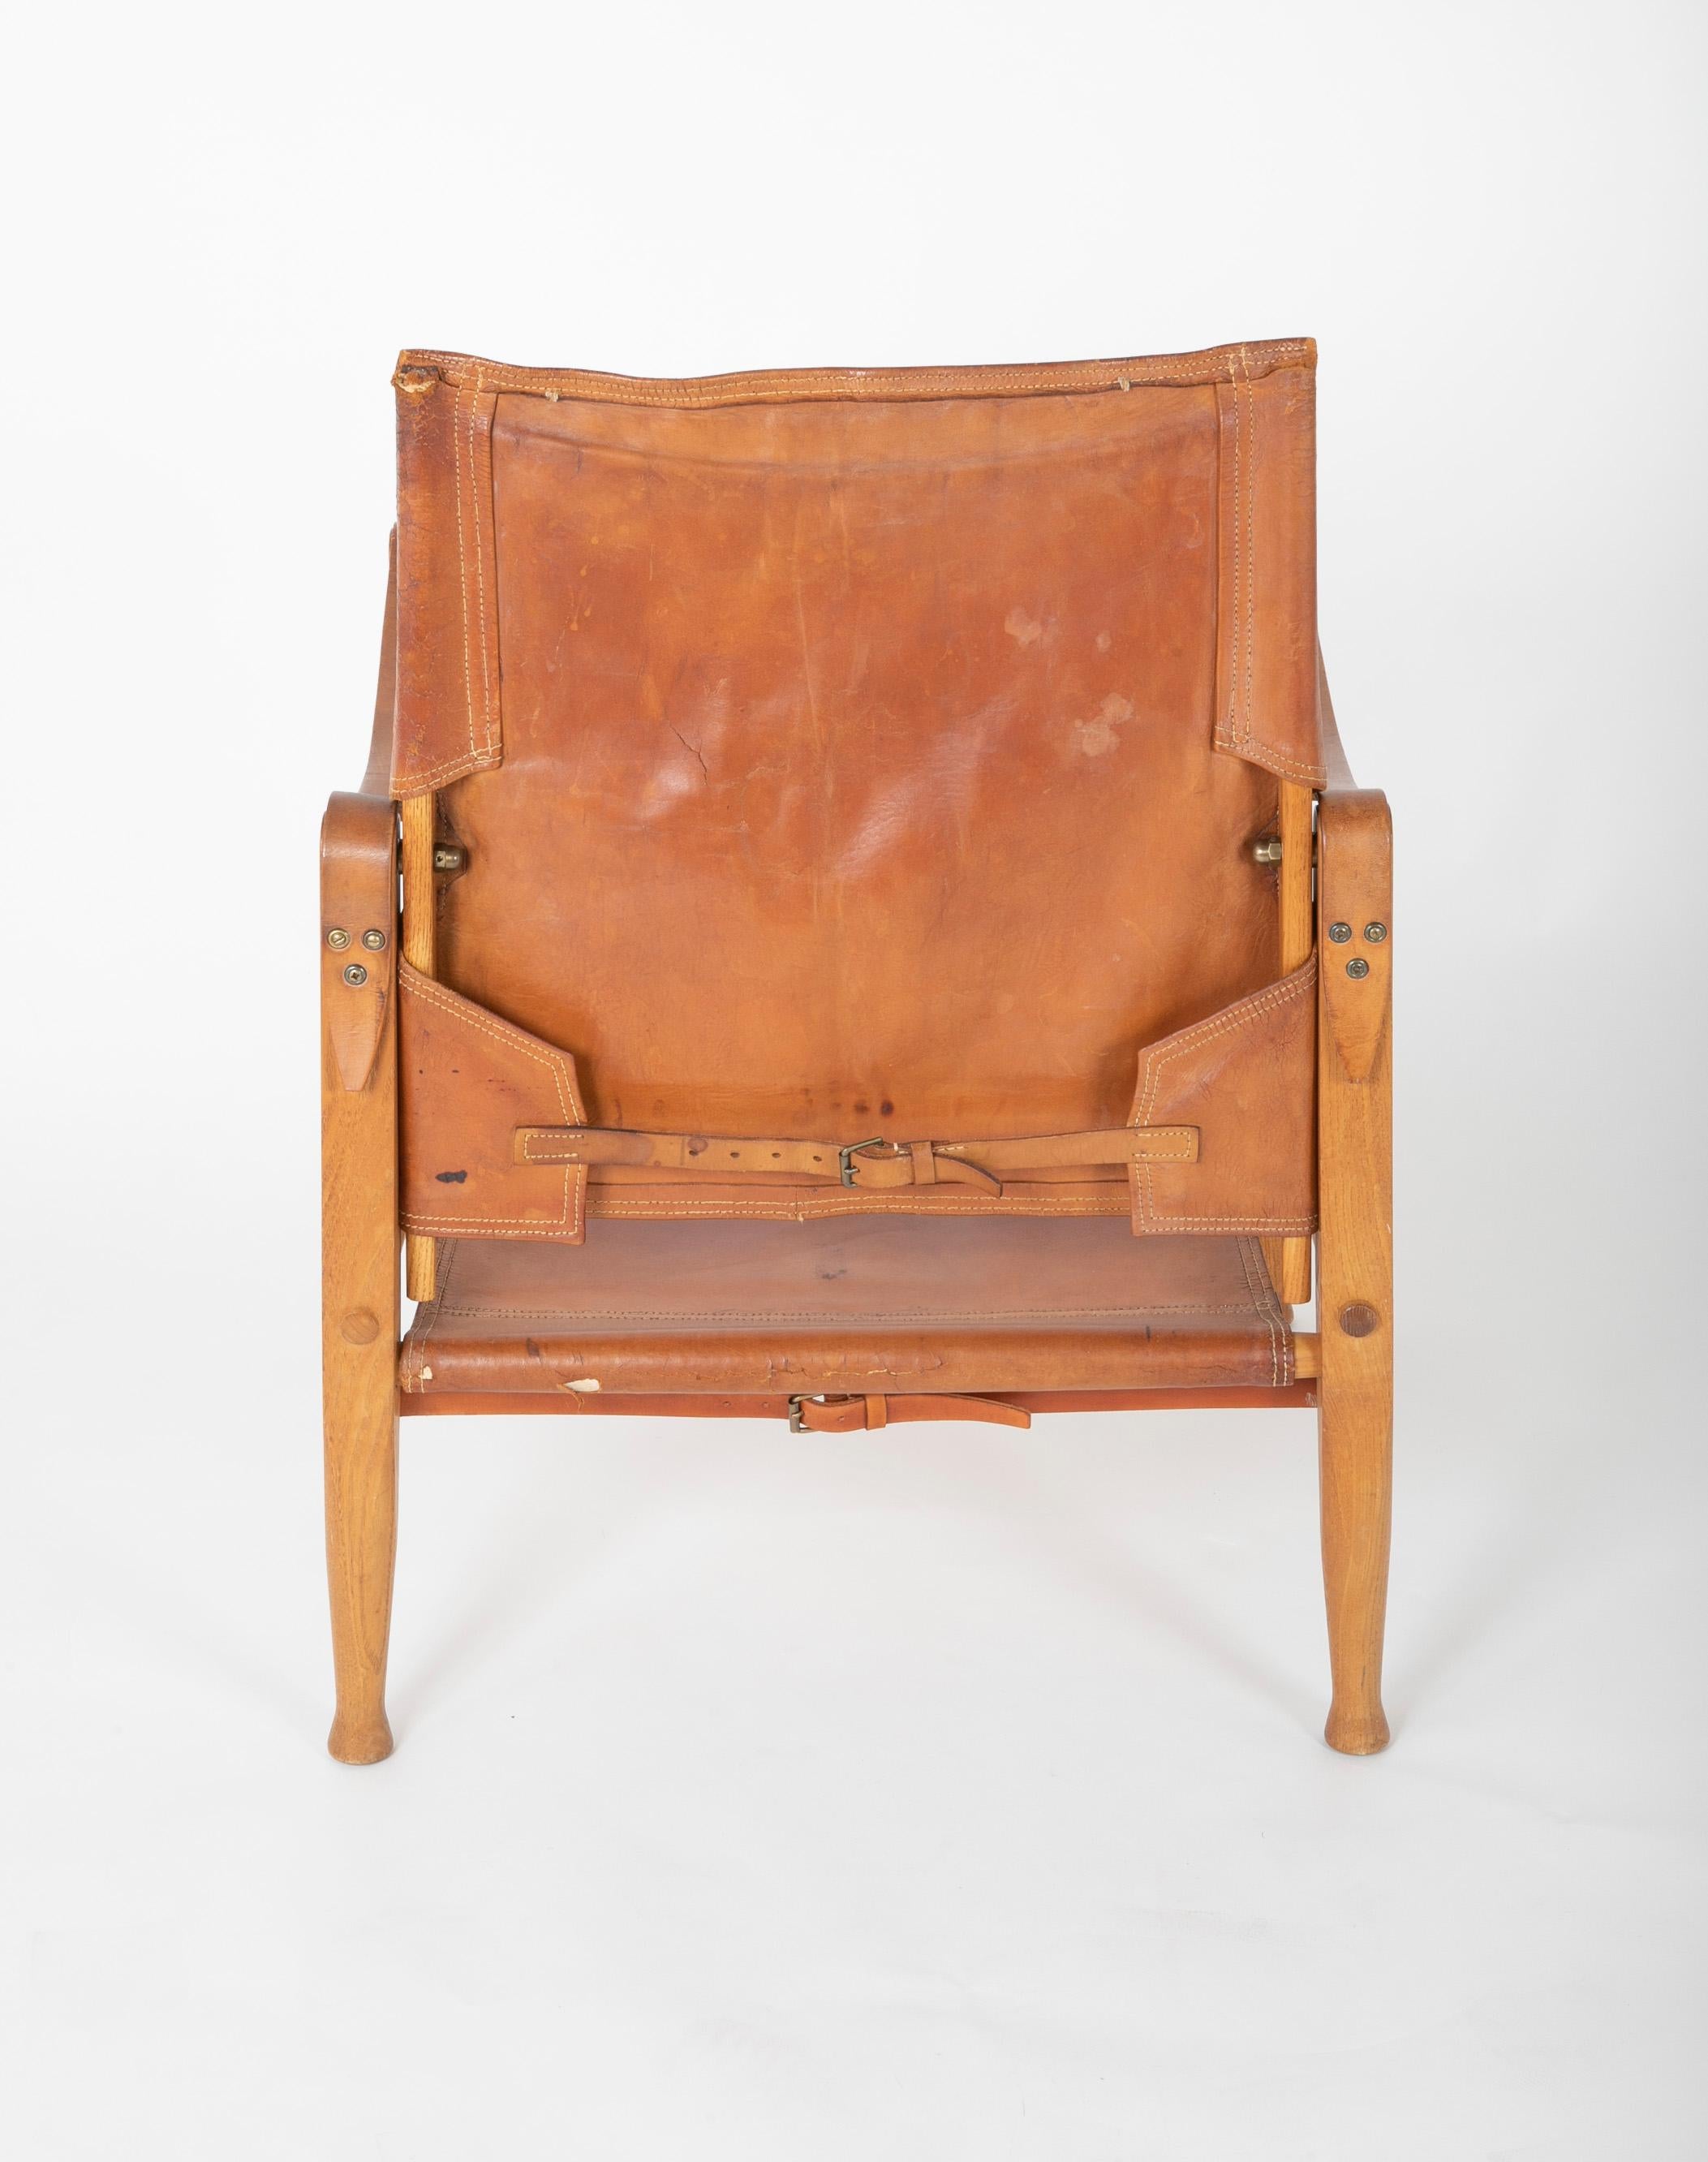 Leather Kaare Klint Safari Chair, Rasmussen Edition For Sale